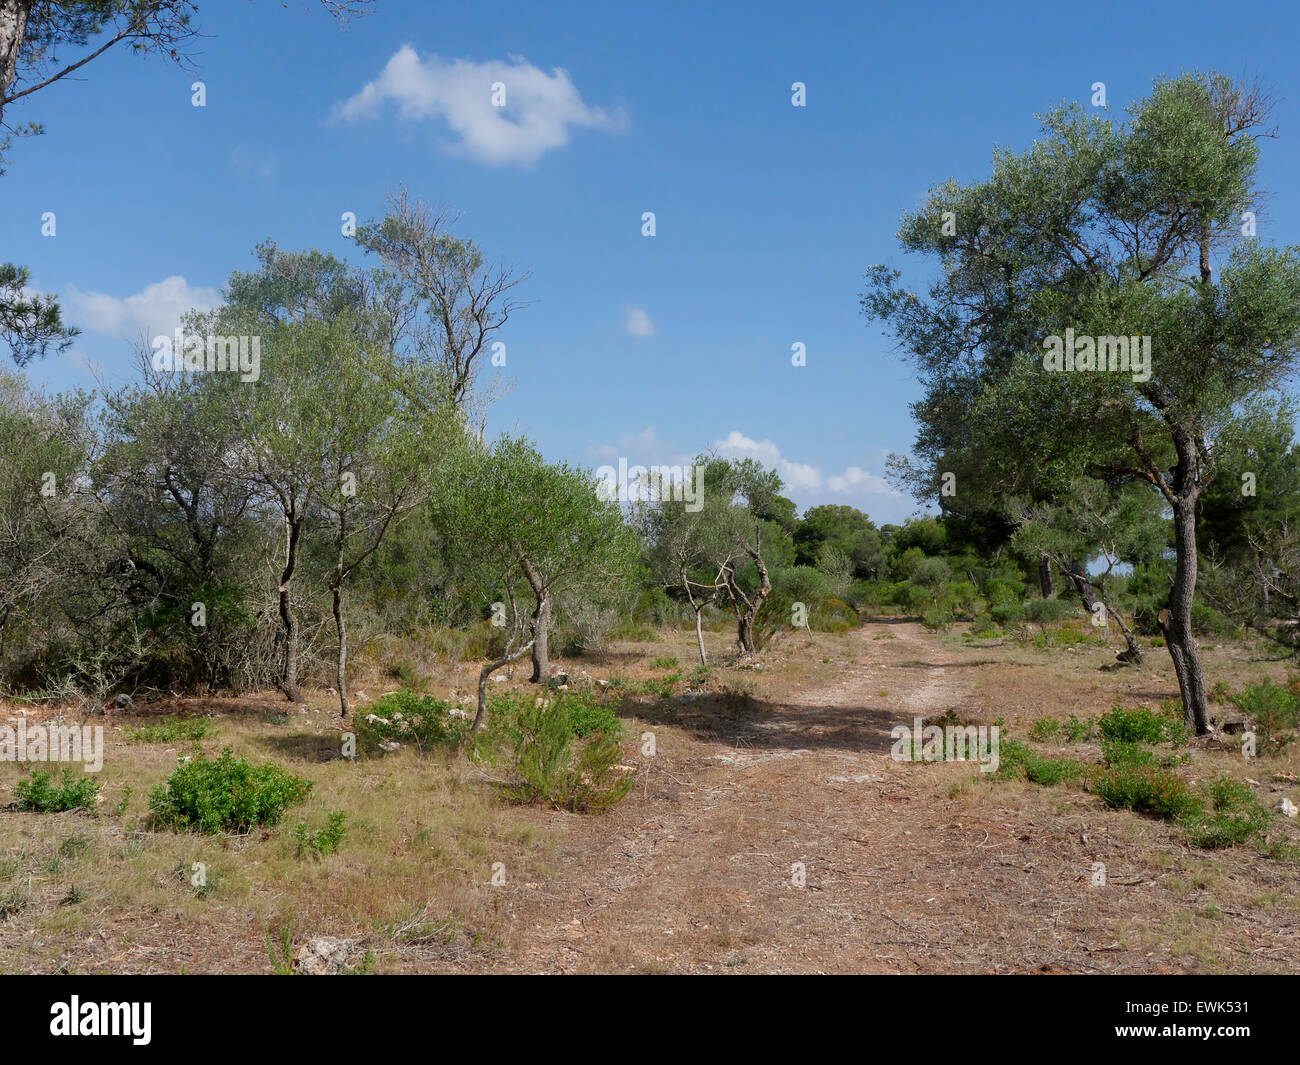 Son Real, Kiefer-Wald, Vogelbeobachtung Site, Mallorca, Juni 2015 Stockfoto